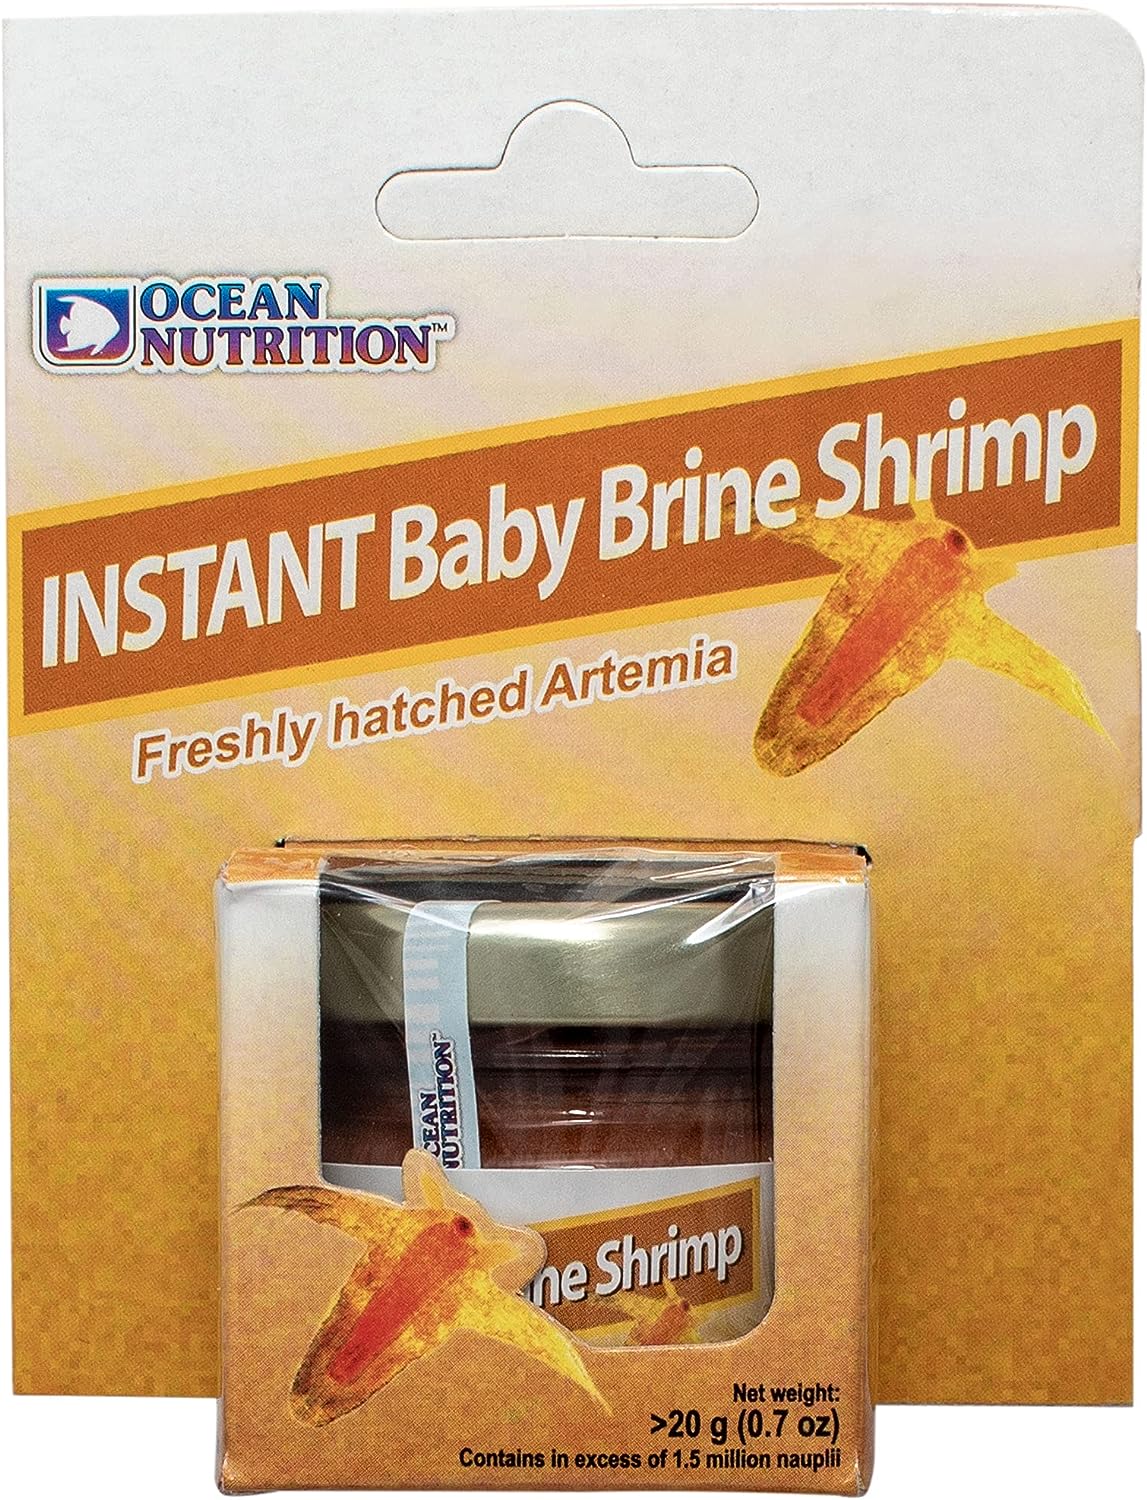 Instant Baby Brine Shrimp